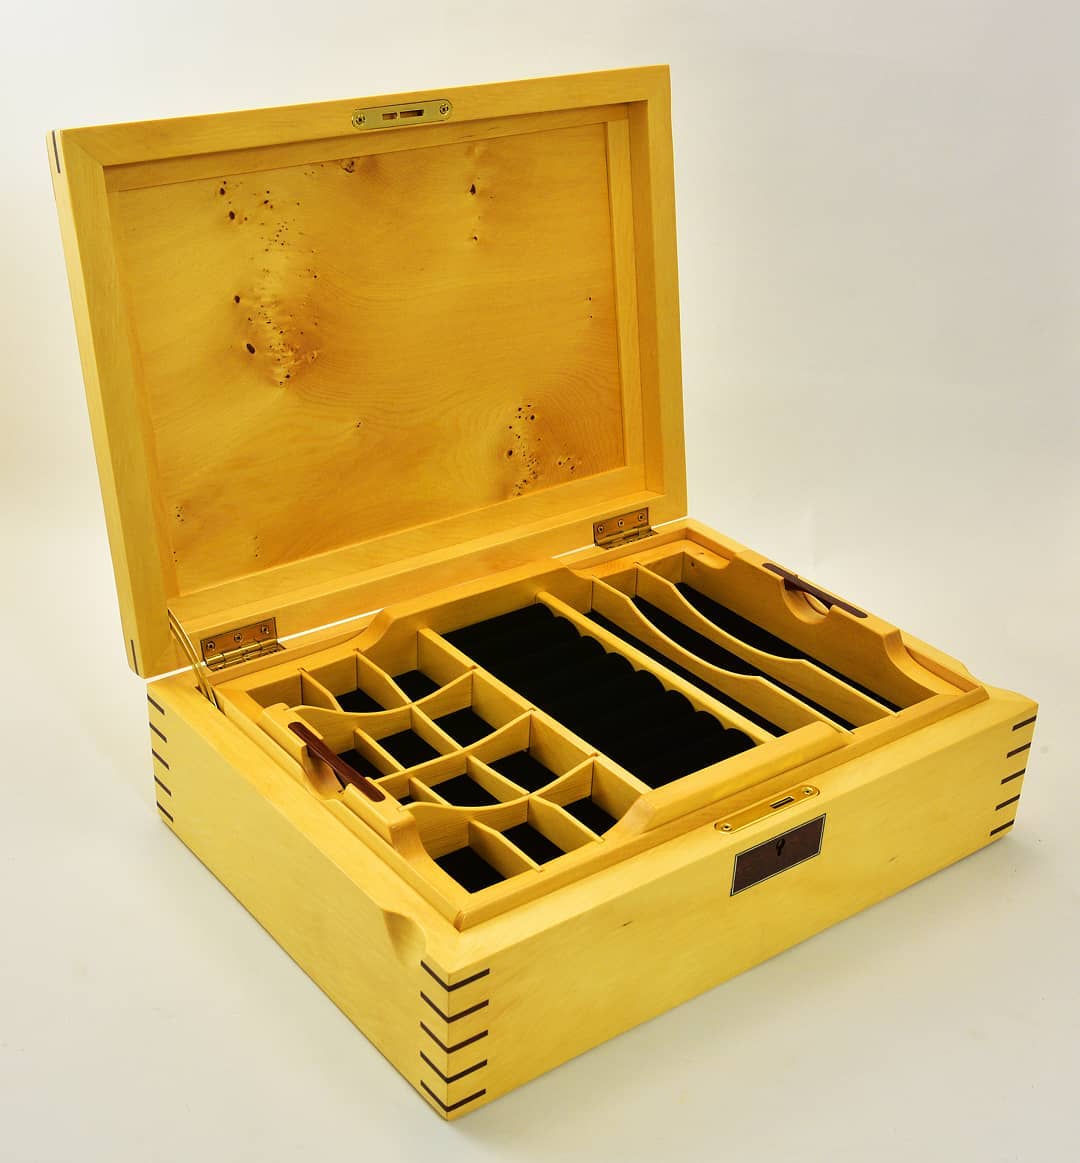 box, ایده های ساخت جعبه چوبی, باکس چوبی, تولید جعبه چوبی, جعبه چوبی طلا, جعبه چوبی کادویی, جعبه لوکس و زیبا, نجاری, جعبه چوبی